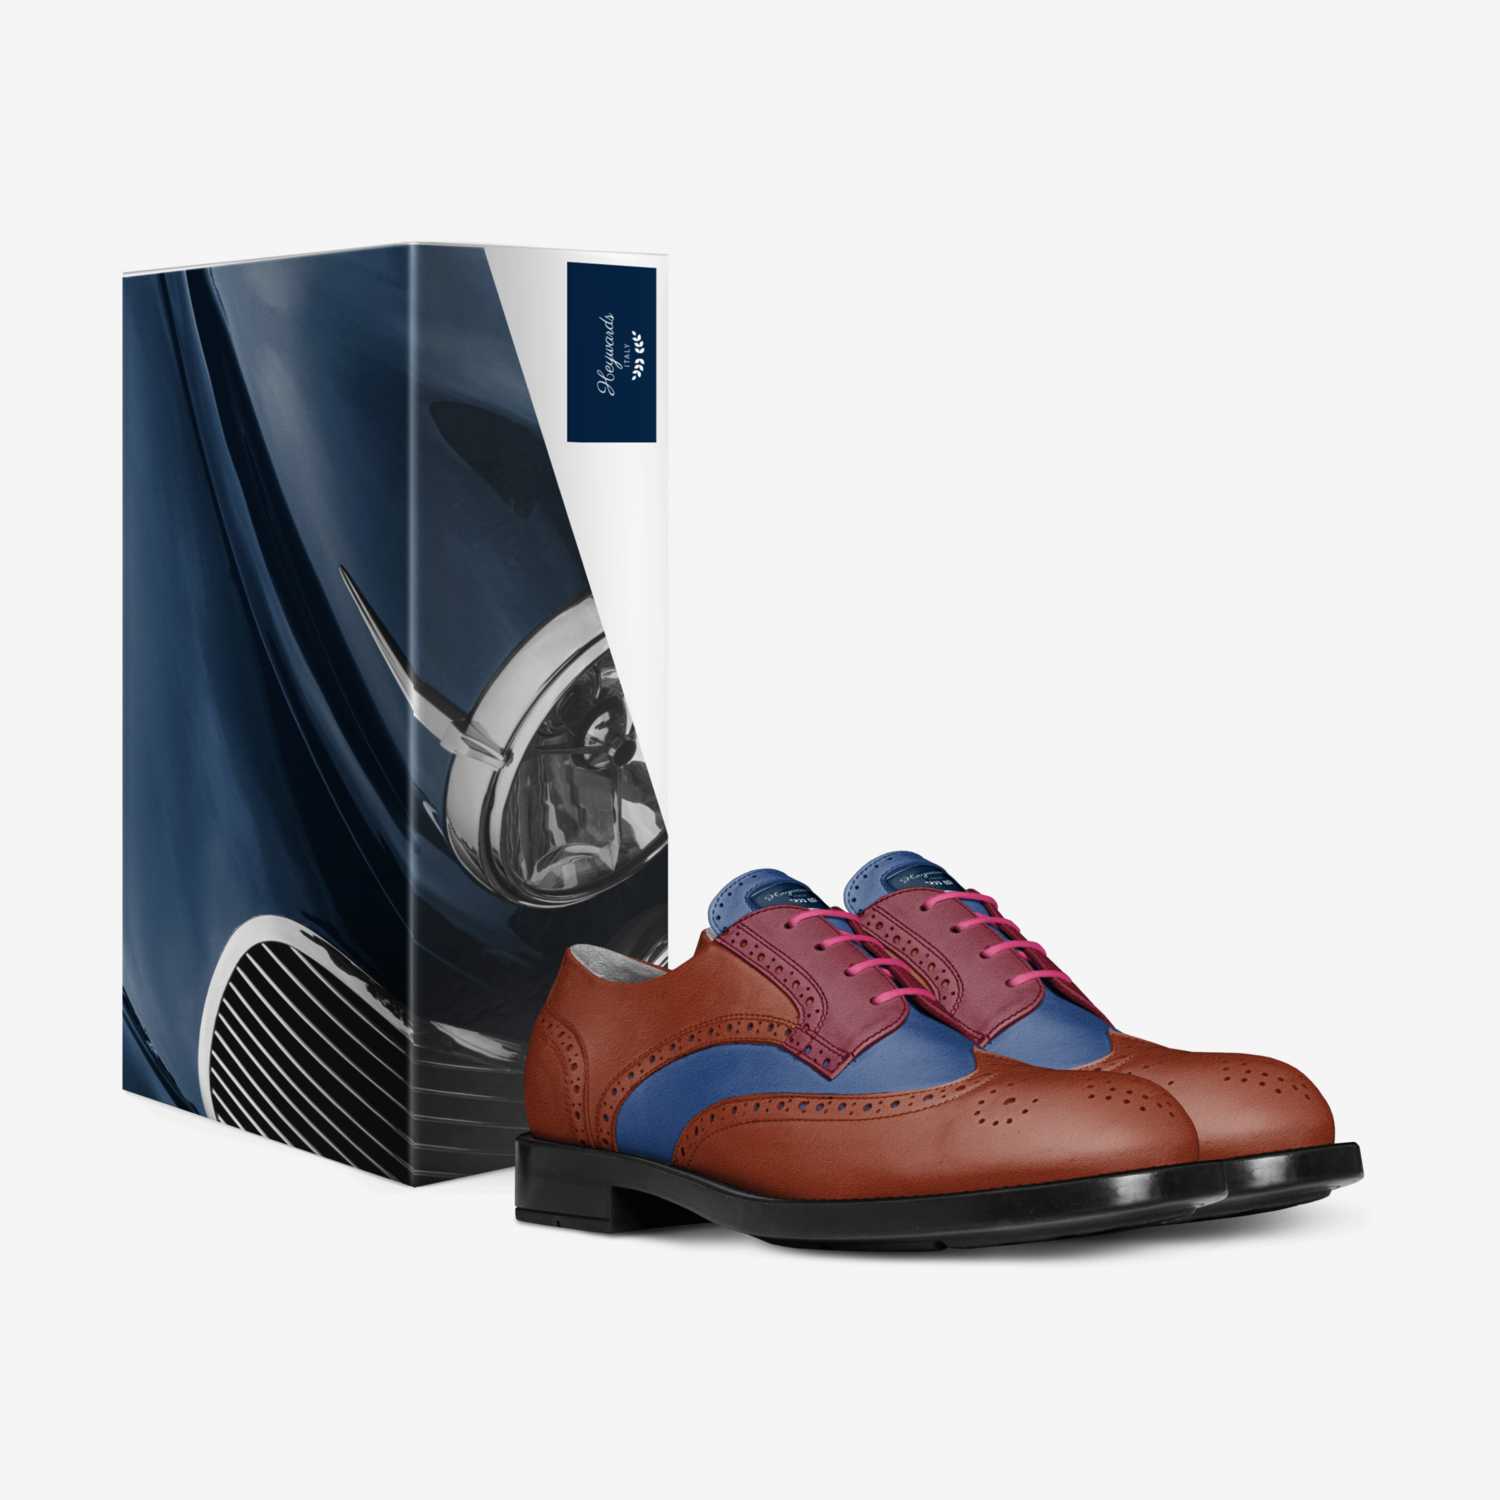 Heywards custom made in Italy shoes by Theodora Howard | Box view